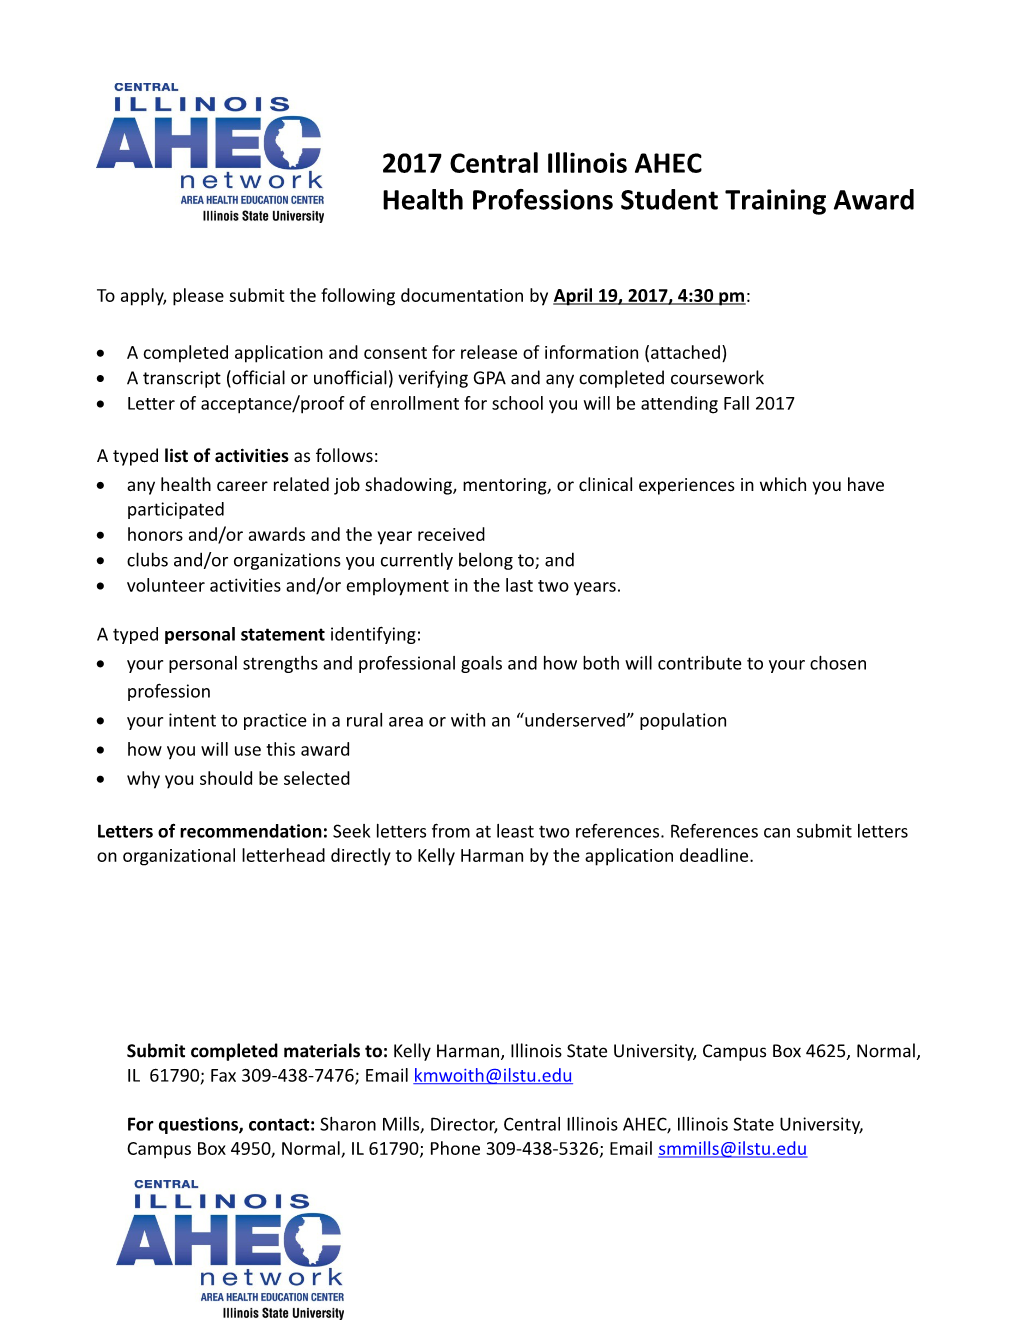 Health Professions Student Training Award